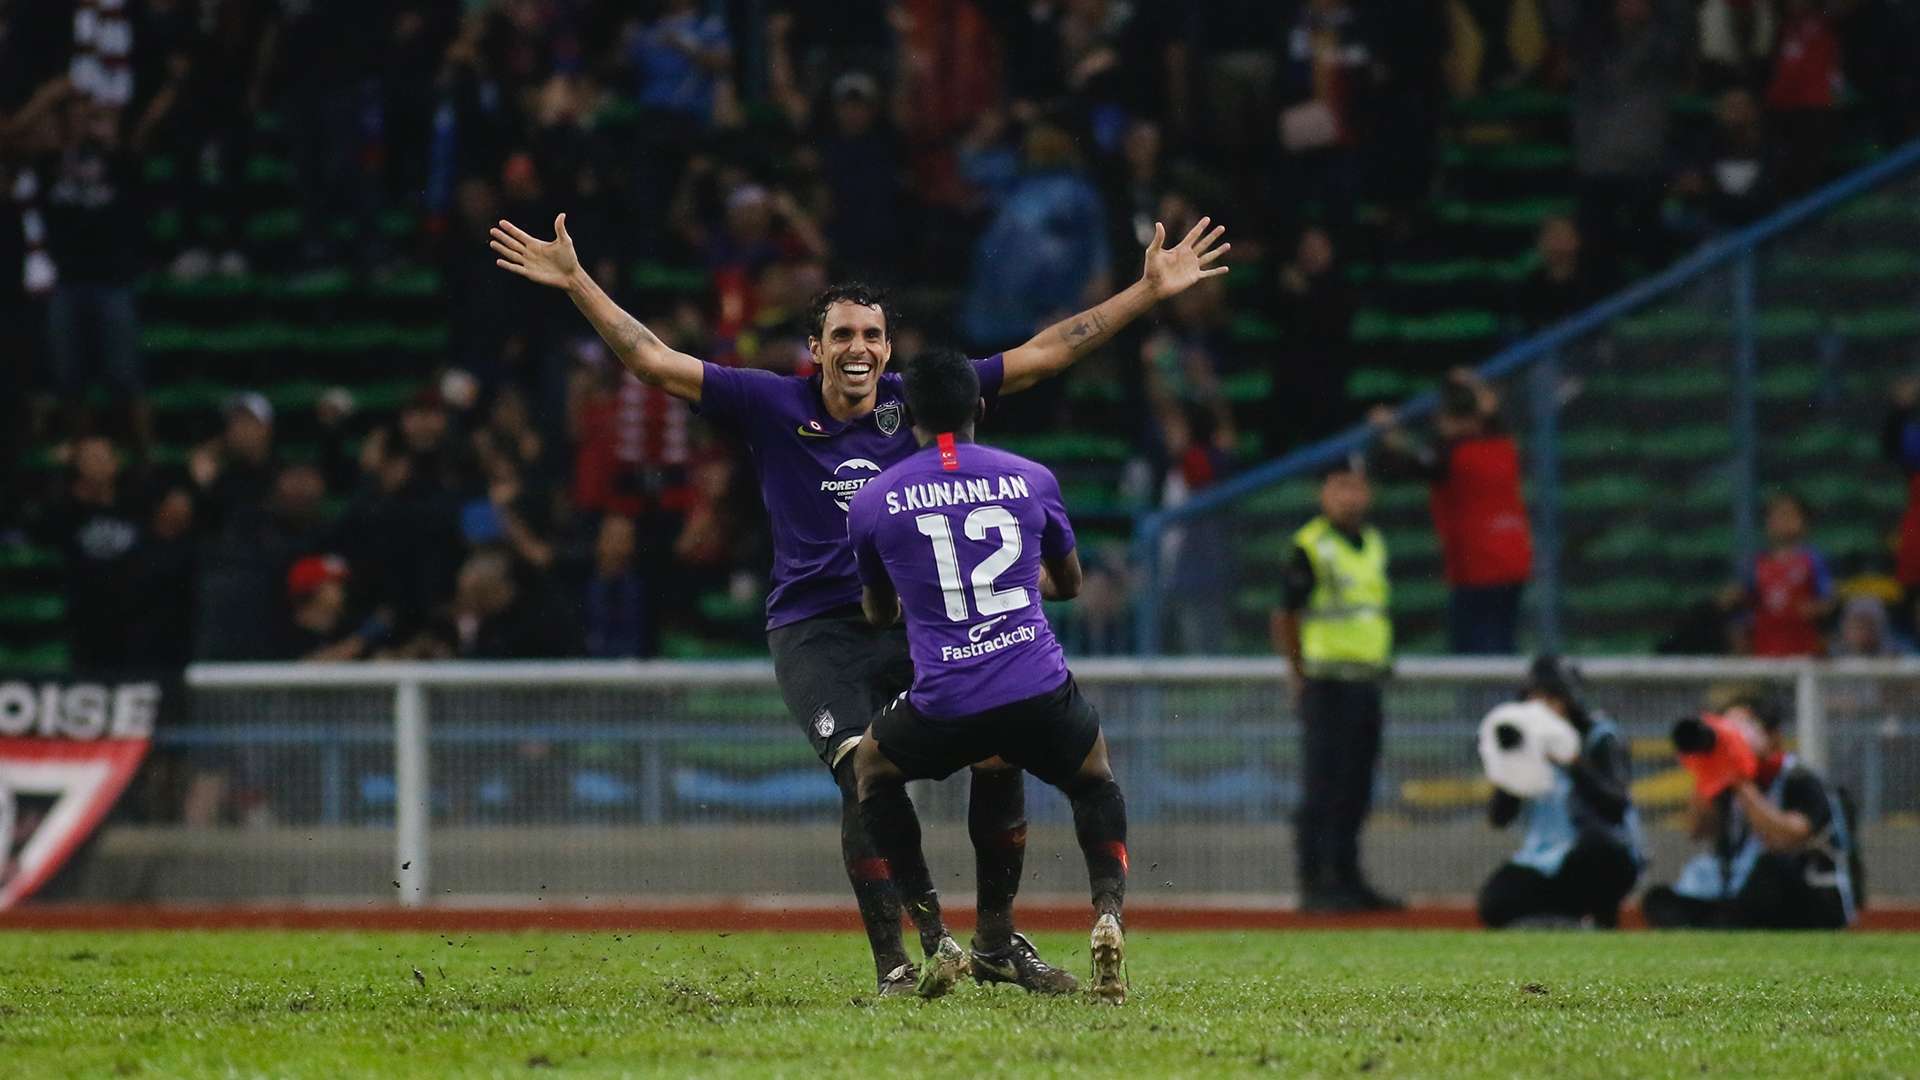 Diogo Luis Santo, S. Kunanlan, Selangor v Johor Darul Ta'zim, Malaysia Cup, 26 Oct 2019